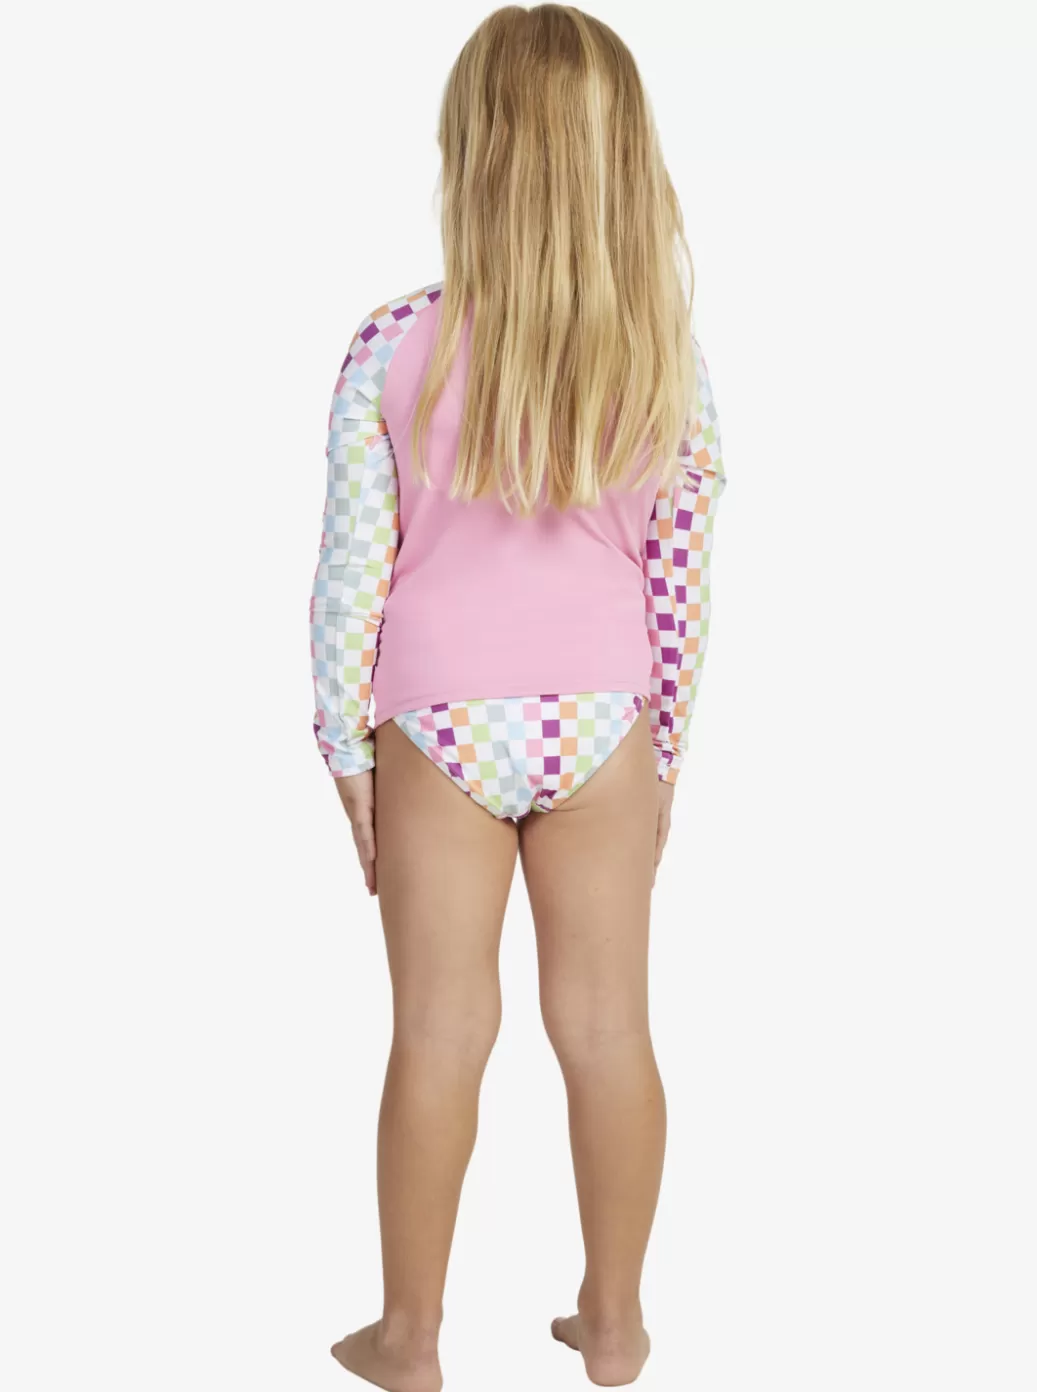 Surf | KIDS ROXY Girl's 2-7 Rainbow Check Long Sleeve Rashguard Set Bright White Check Check